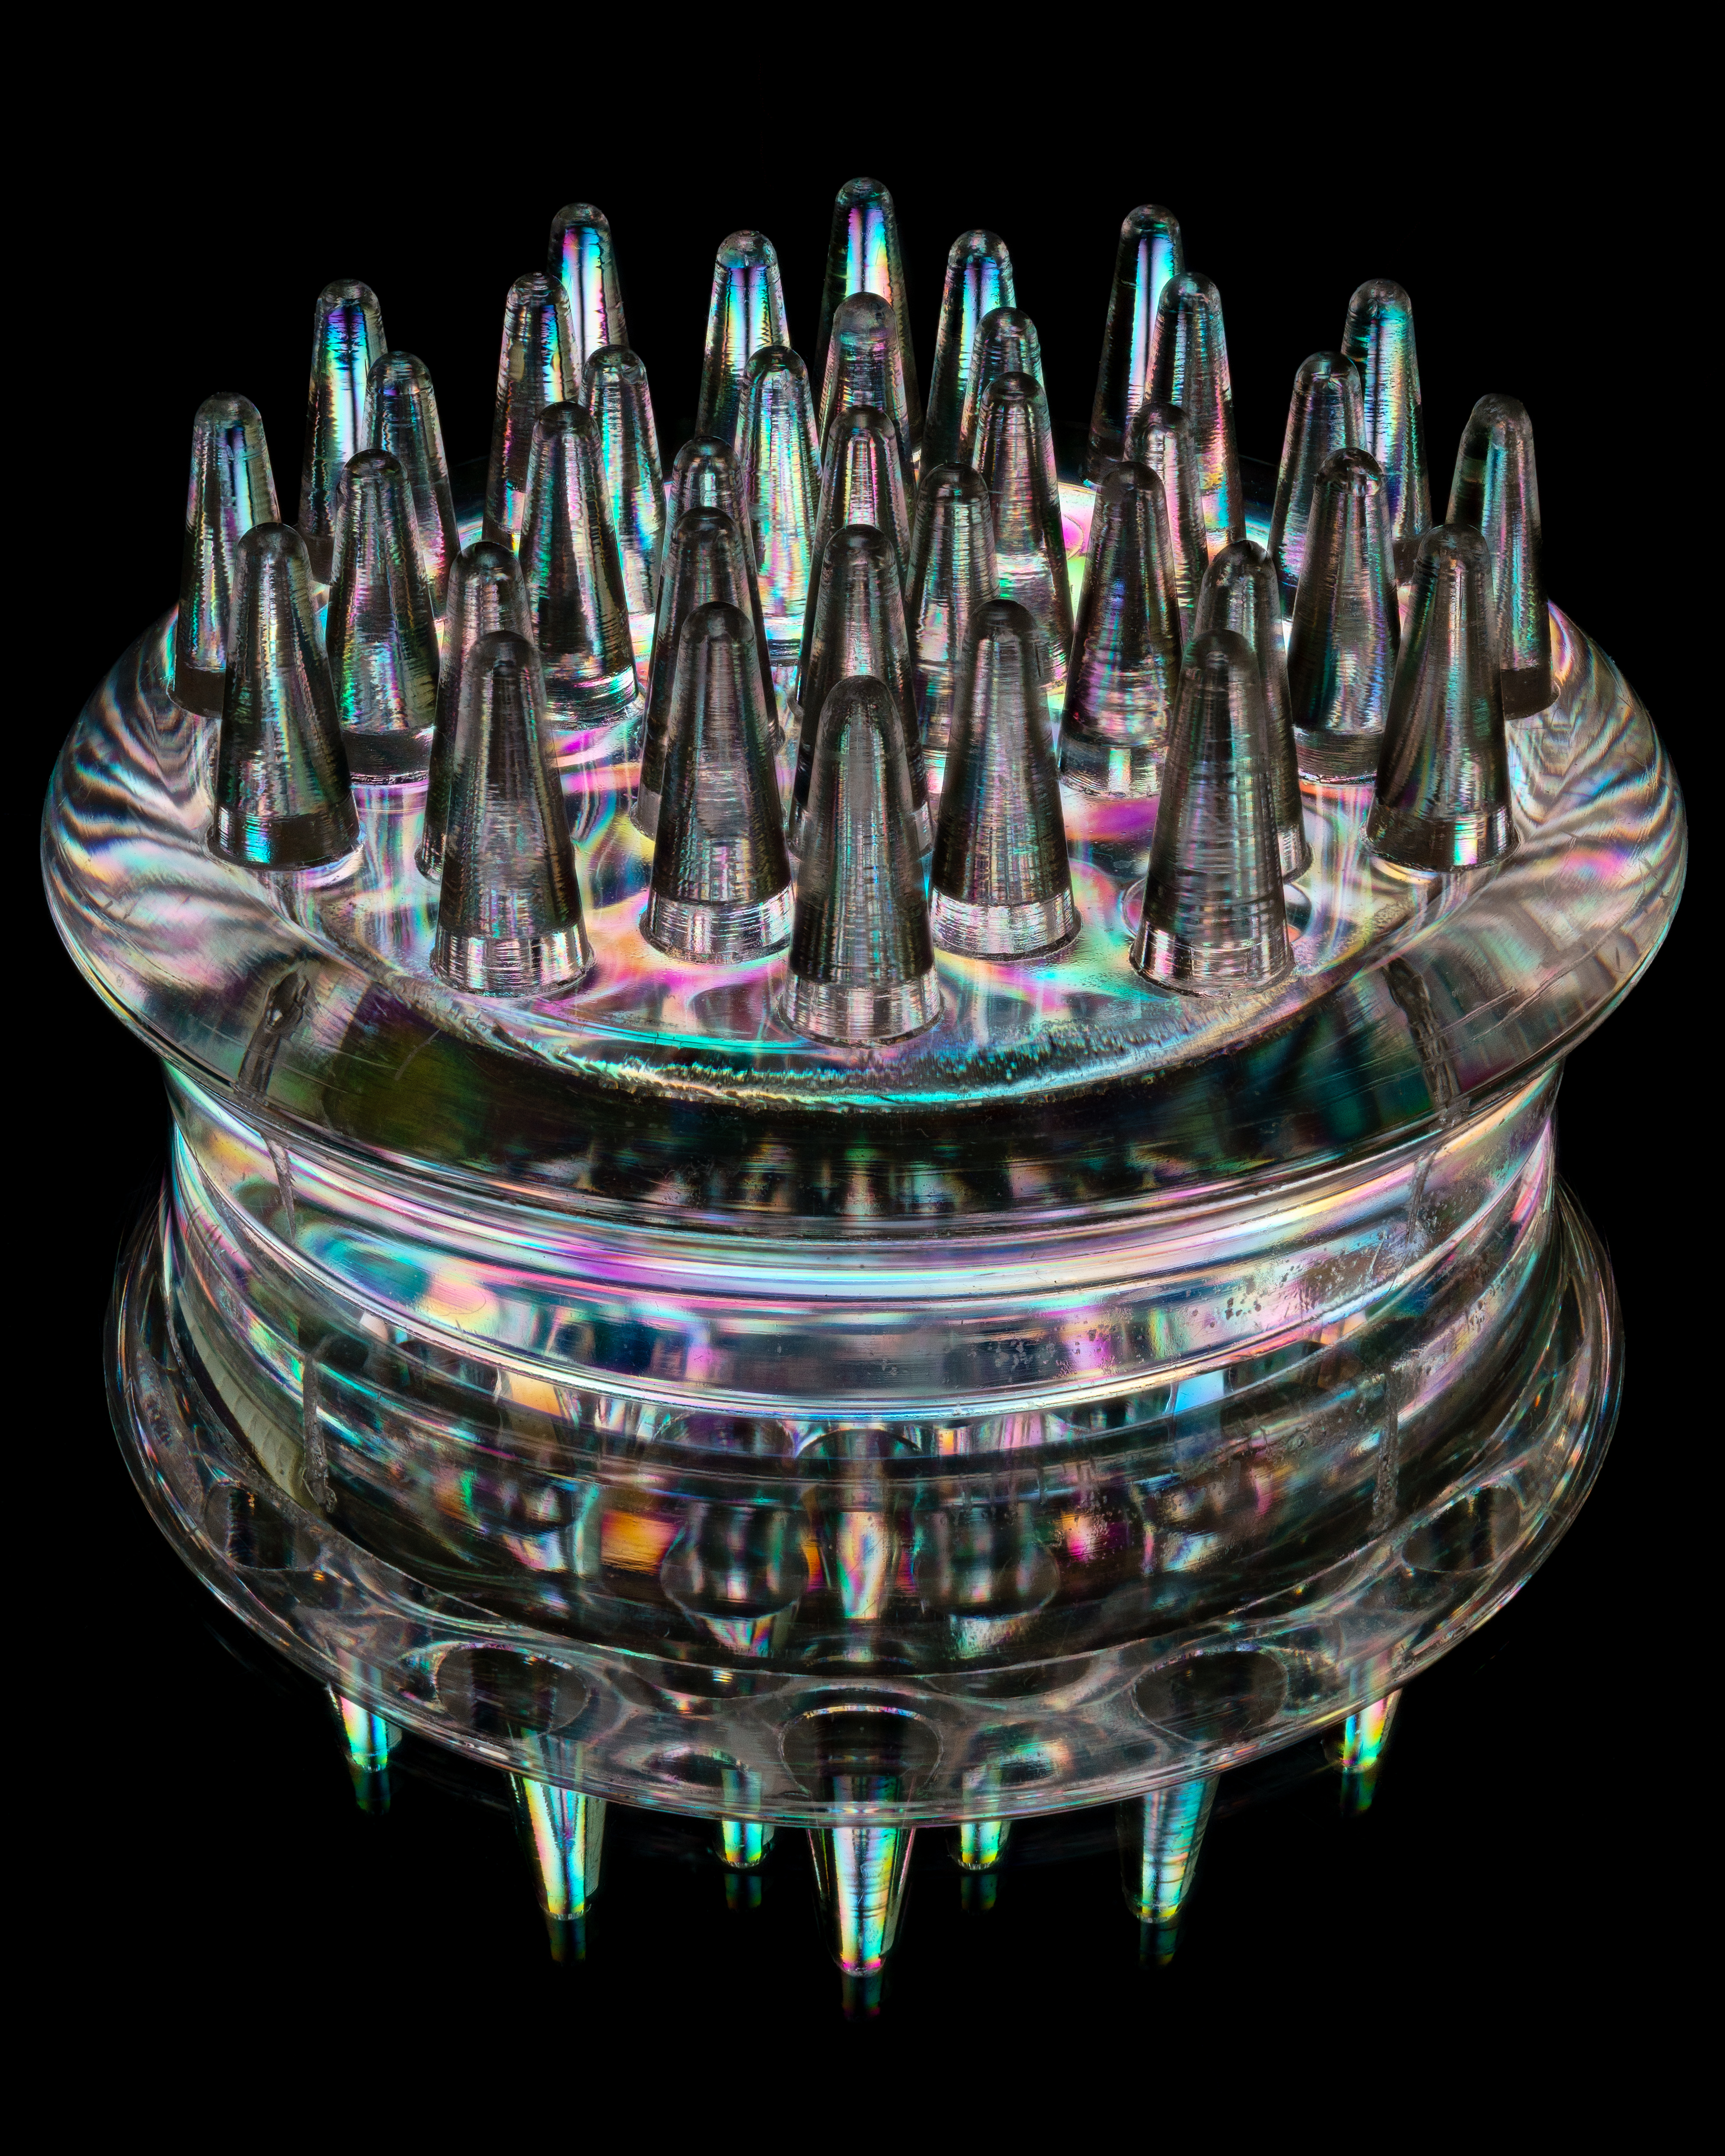 Photoelasticity - Spiked castor cup